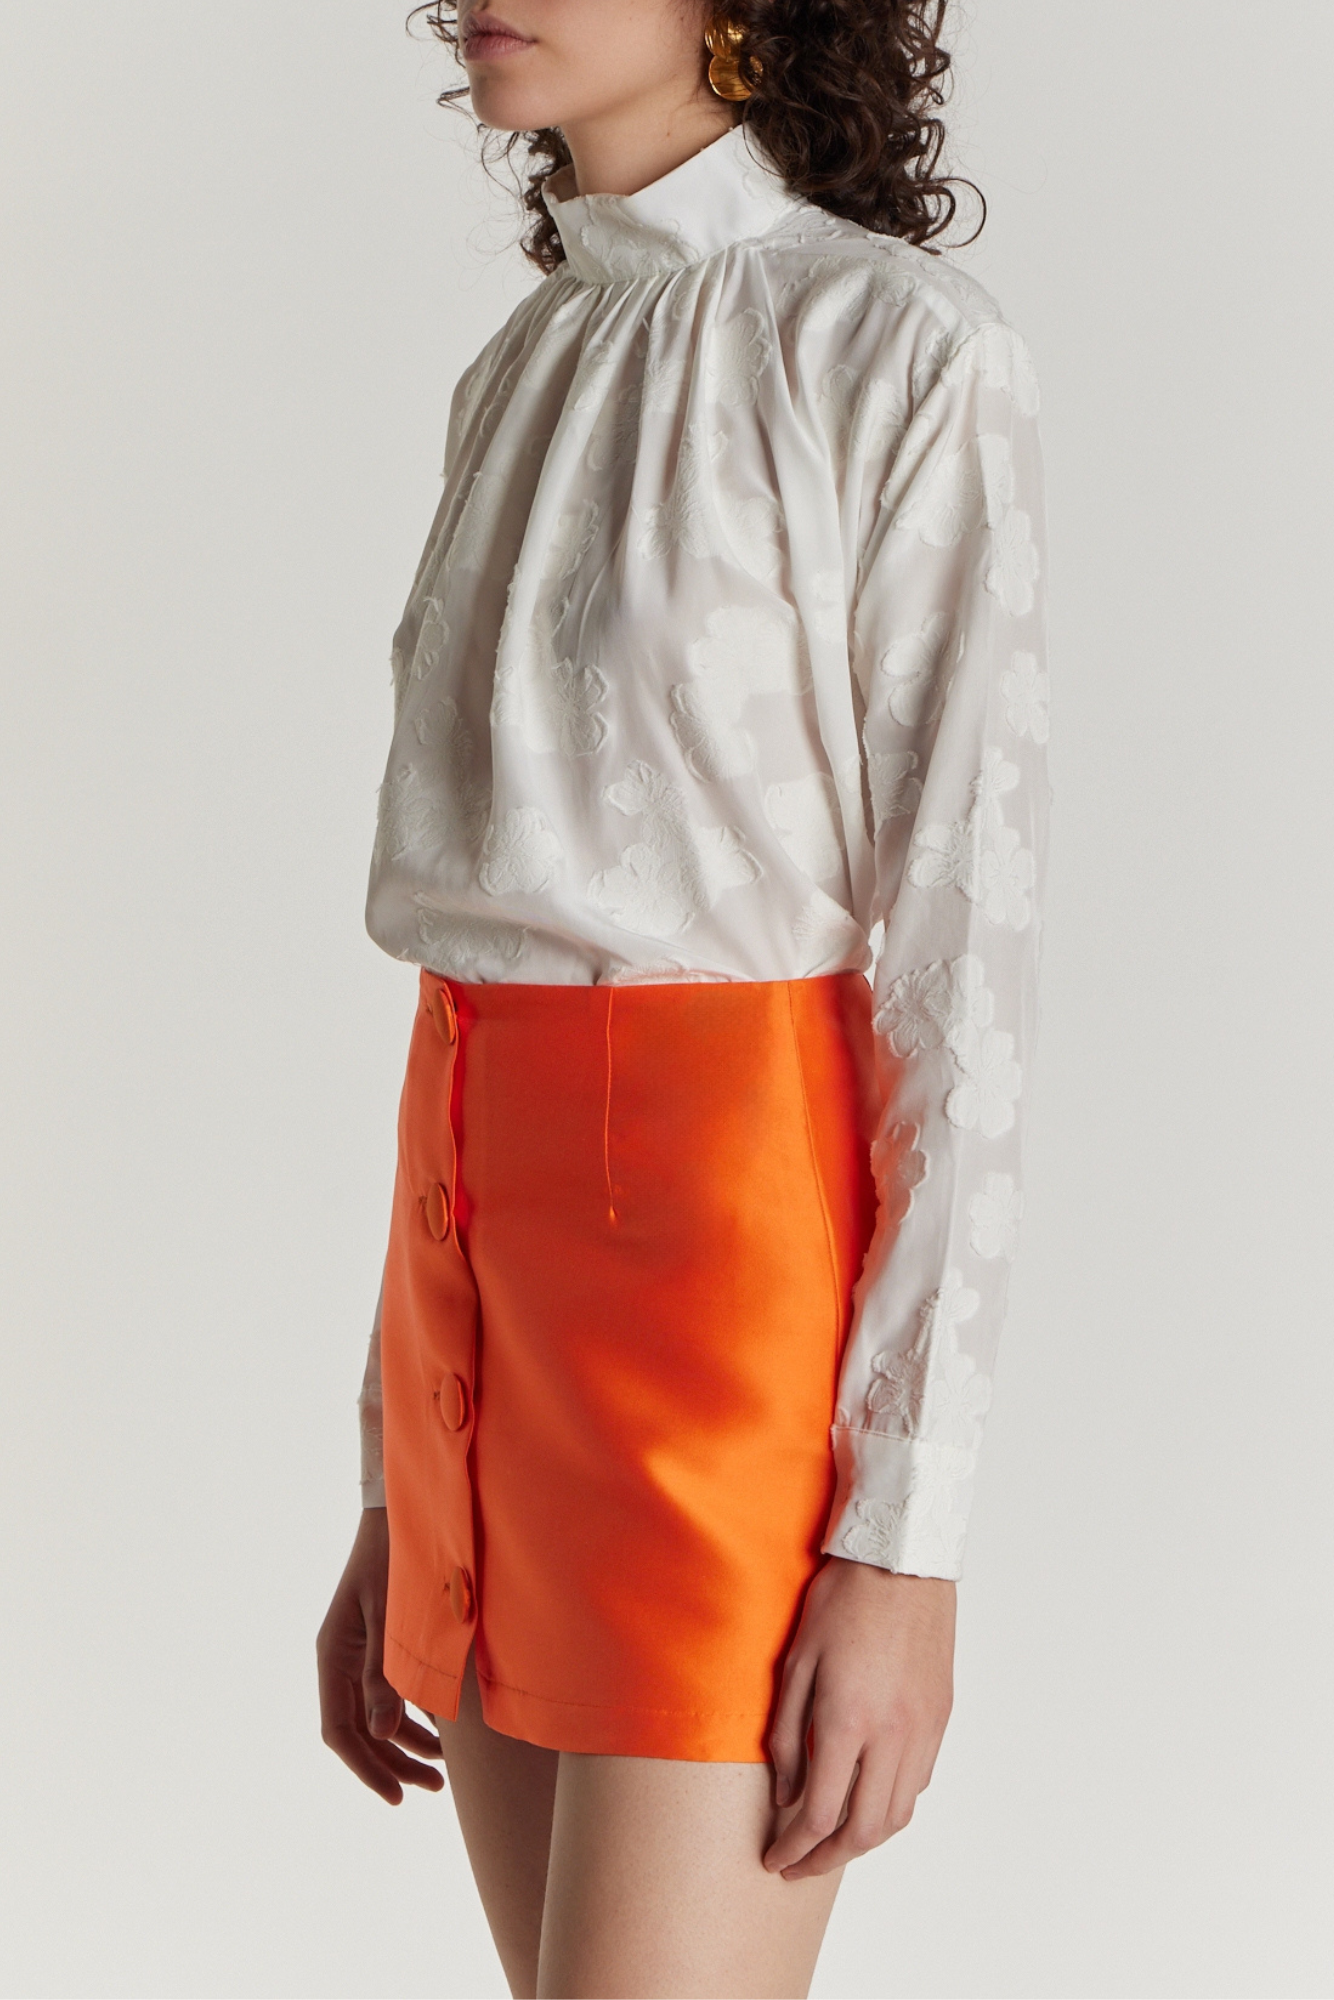 ORANGE Satin Mini Skirt with buttons